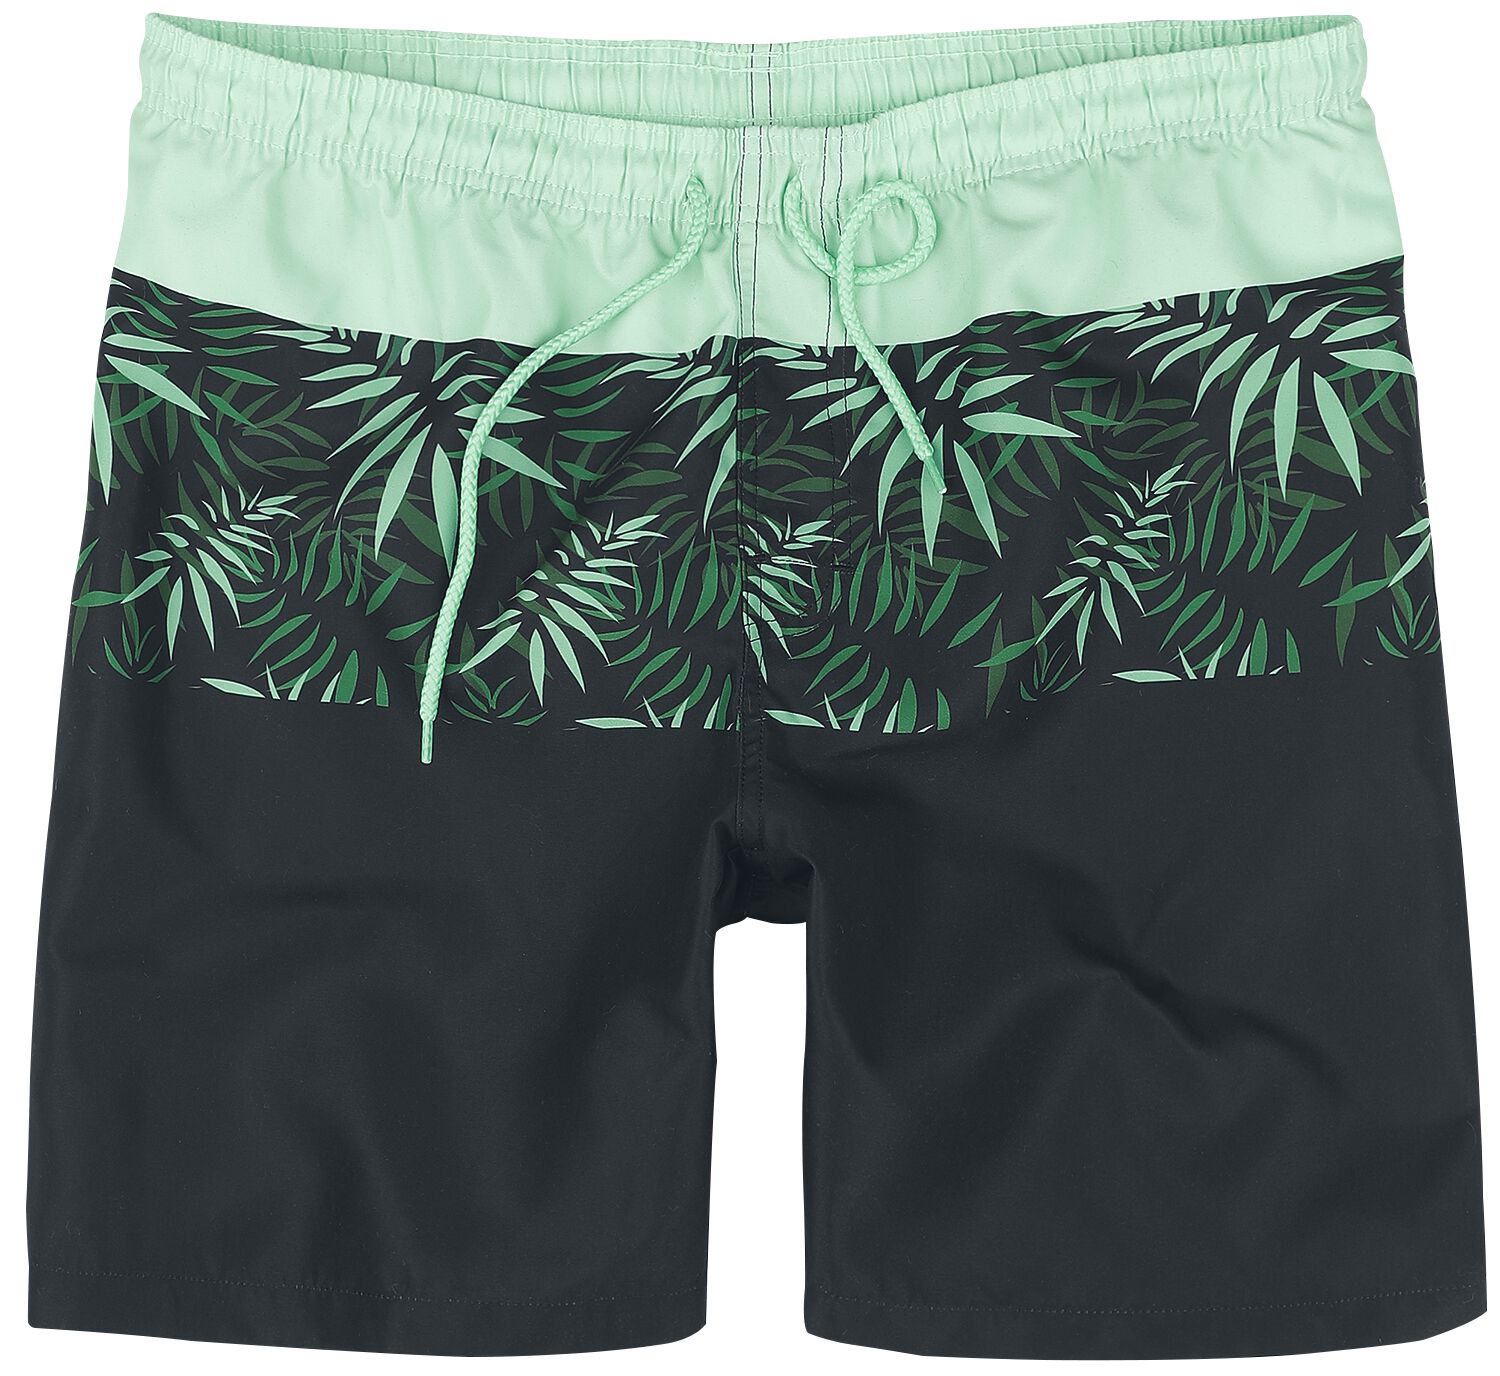 RED by EMP Swim Shorts With Palm Trees Badeshort schwarz grün in M